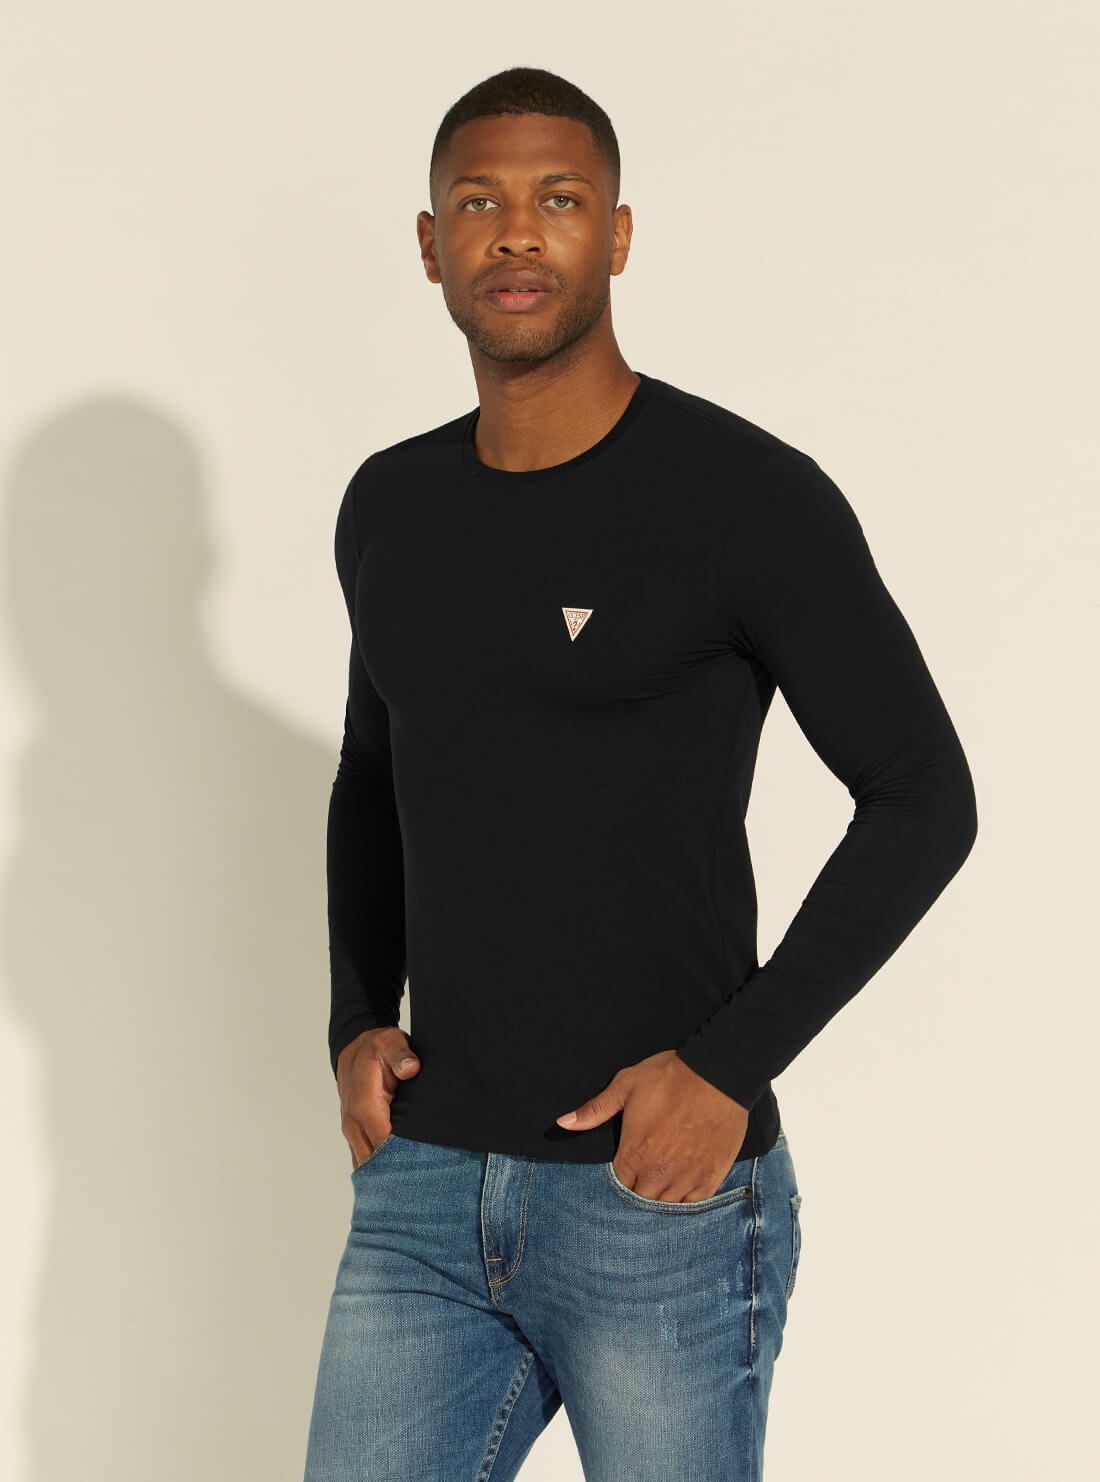 GUESS Mens Black Super Slim Long Sleeve T-Shirt M1RI28J1311 Front View